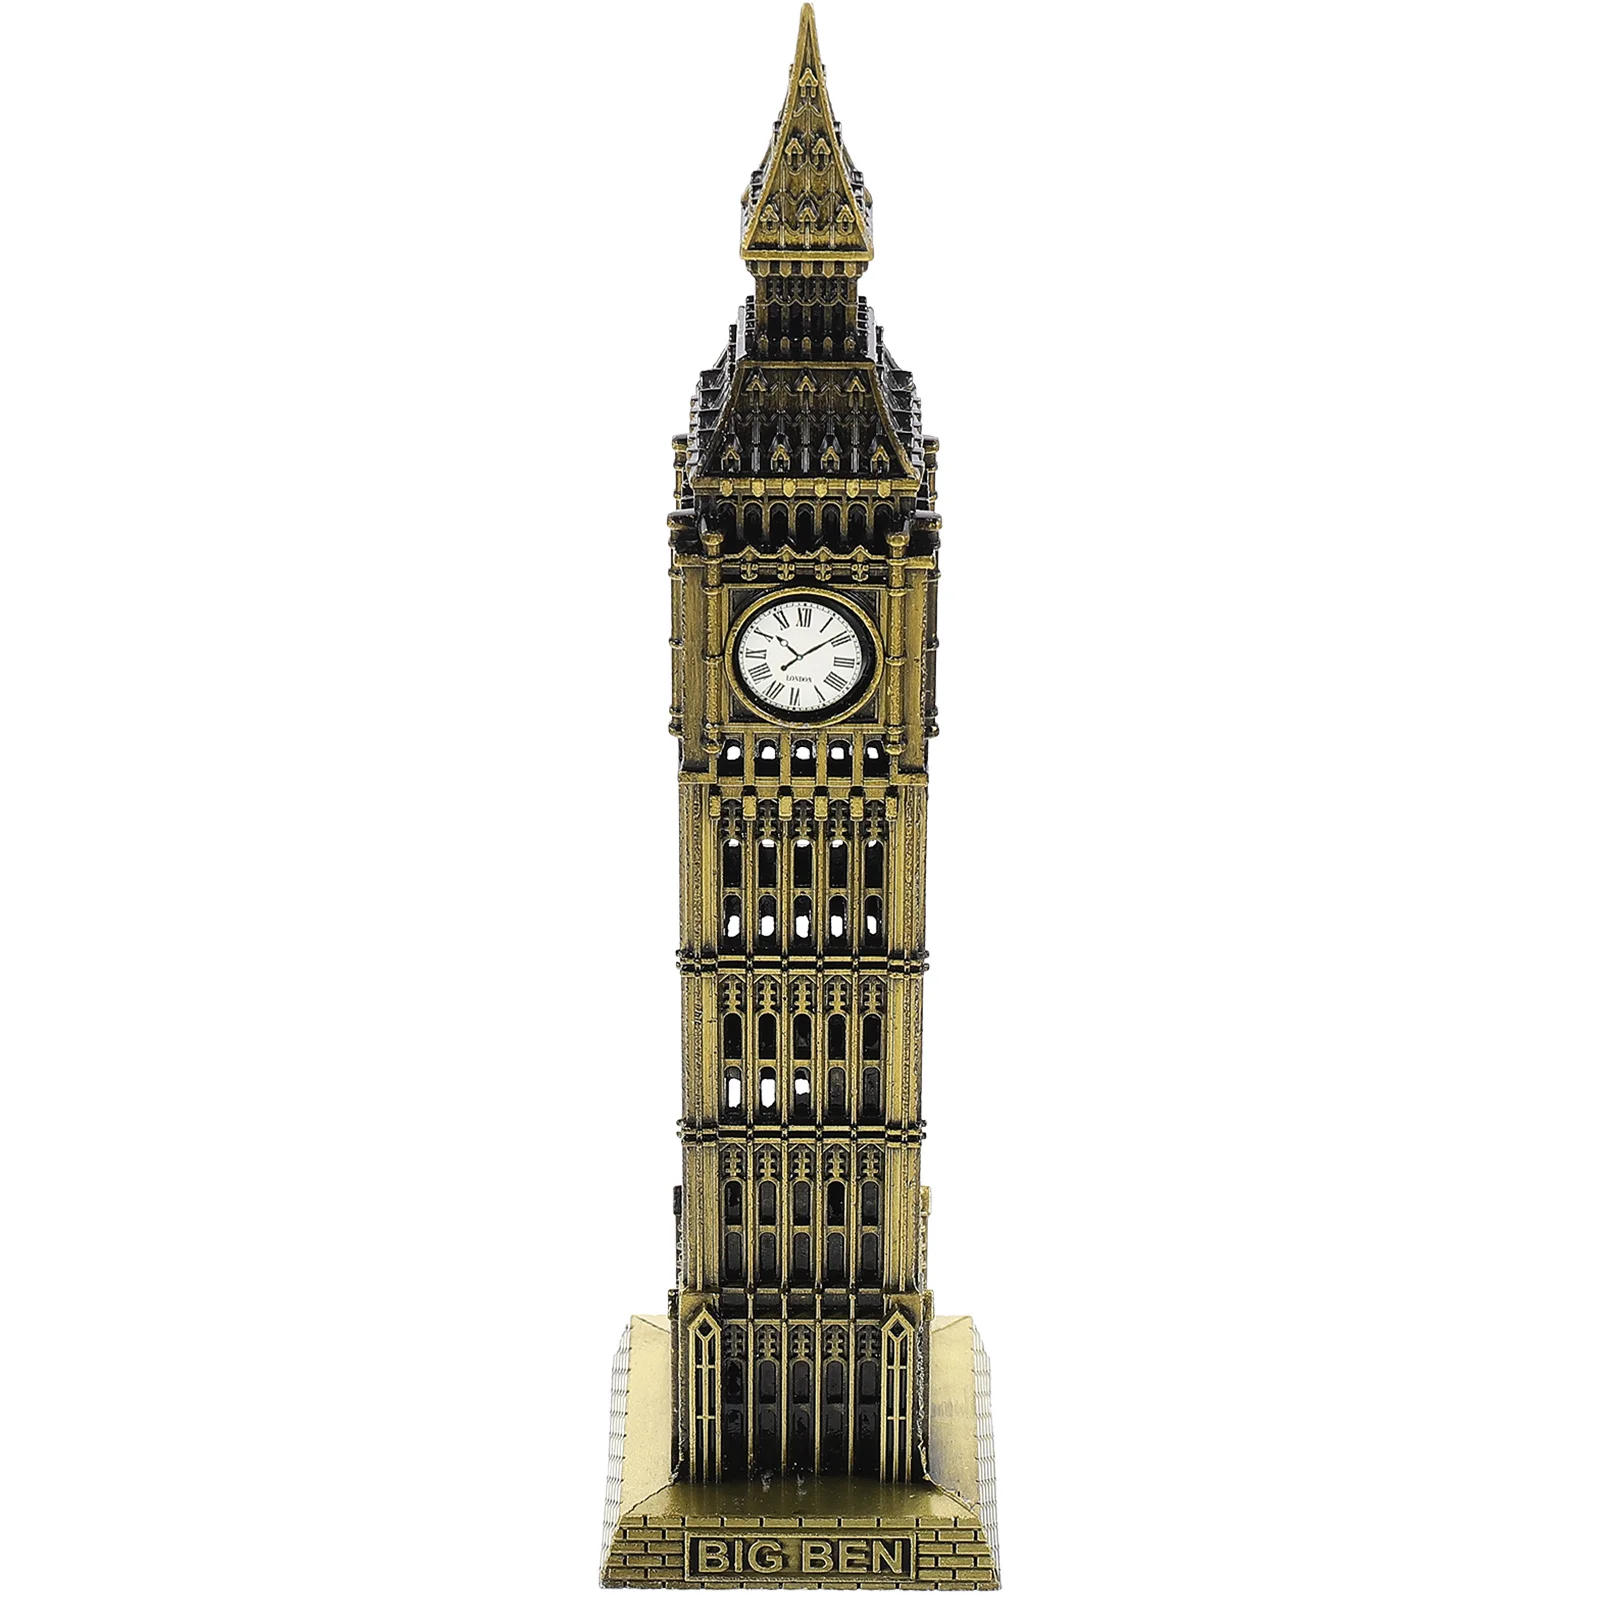 

Big Ben Model Souvenir Figurines Miniature Decorative Architectural Model England Big Ben State Alloy Big Ben Clock Tower Statue